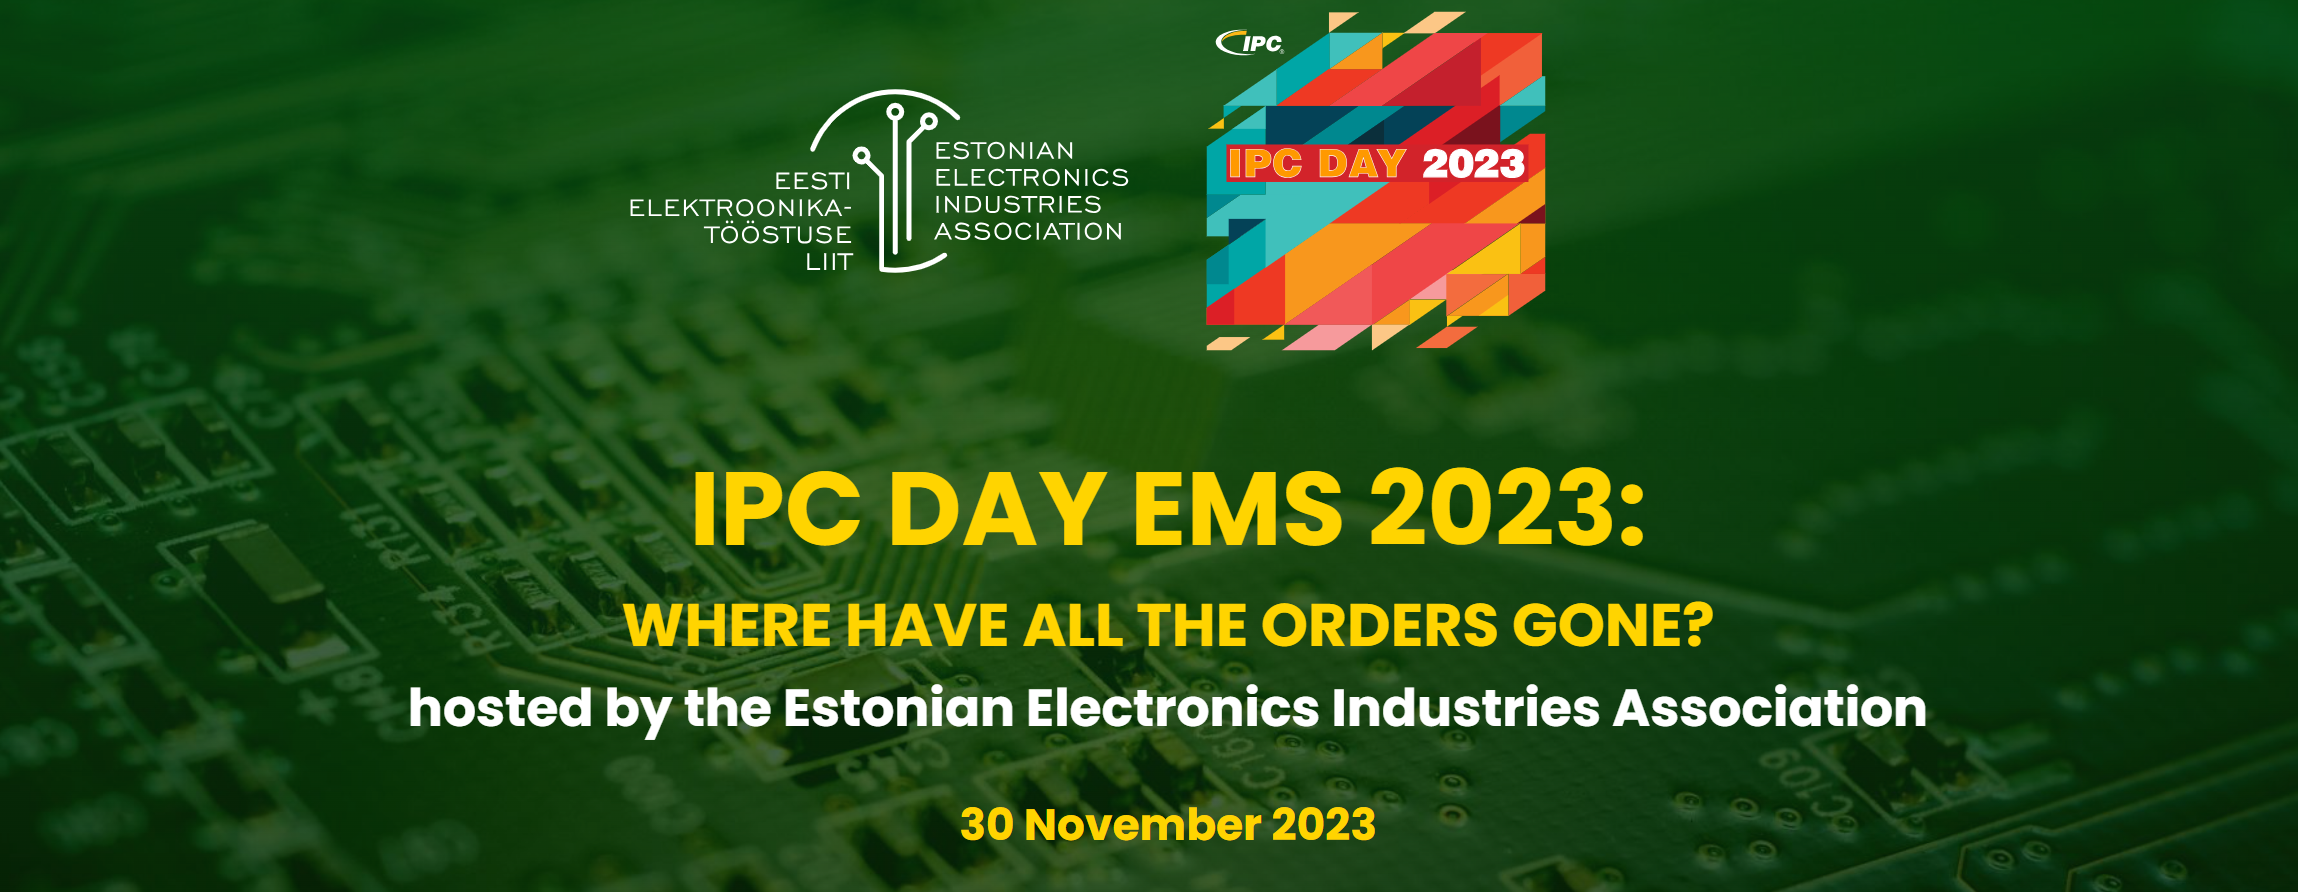 IPC Day EMS 2023 banner